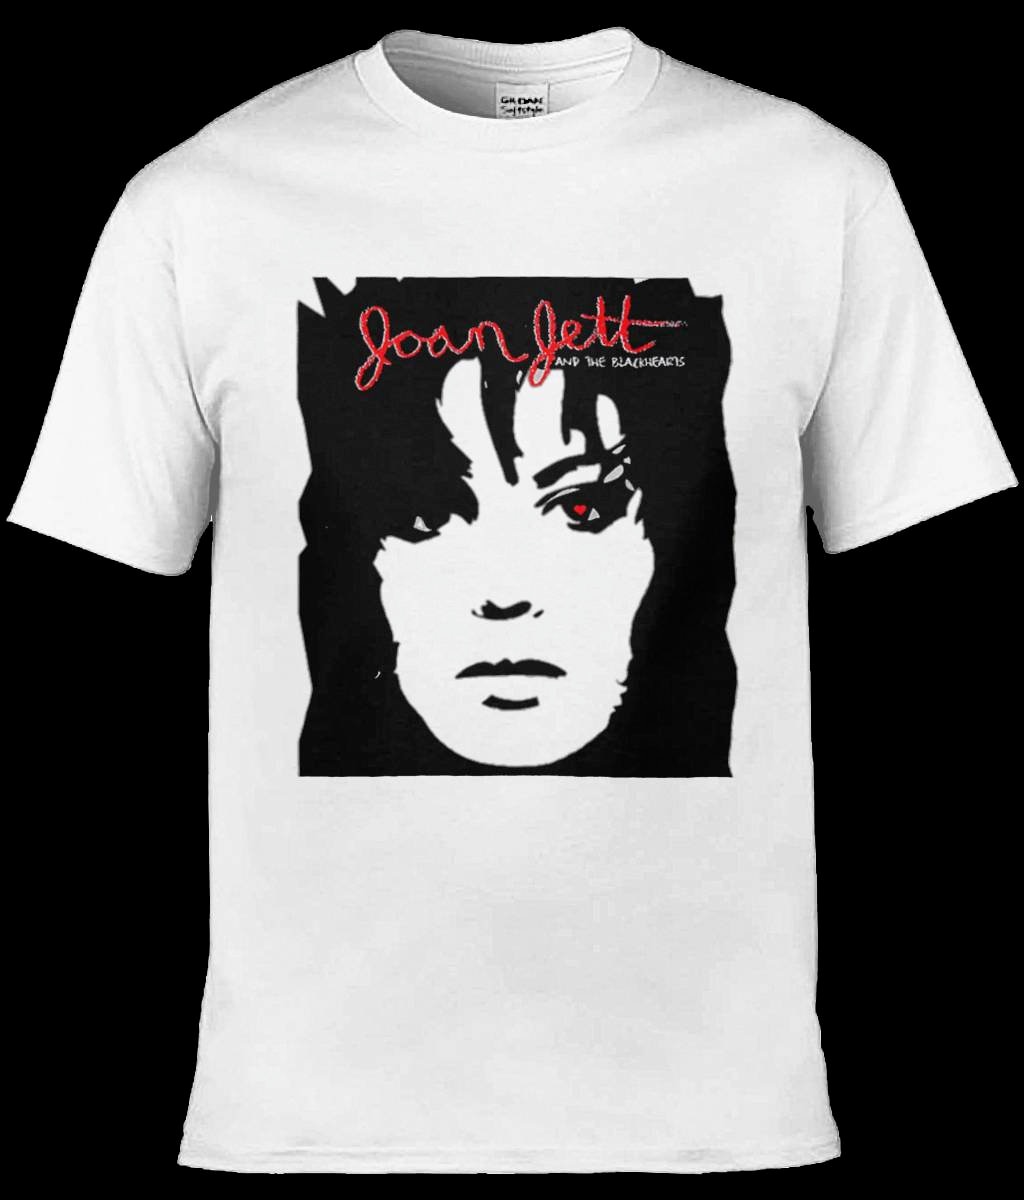 Discover Camiseta Banda Rock Joan Jett y The Blackhearts Vintage para Hombre Mujer